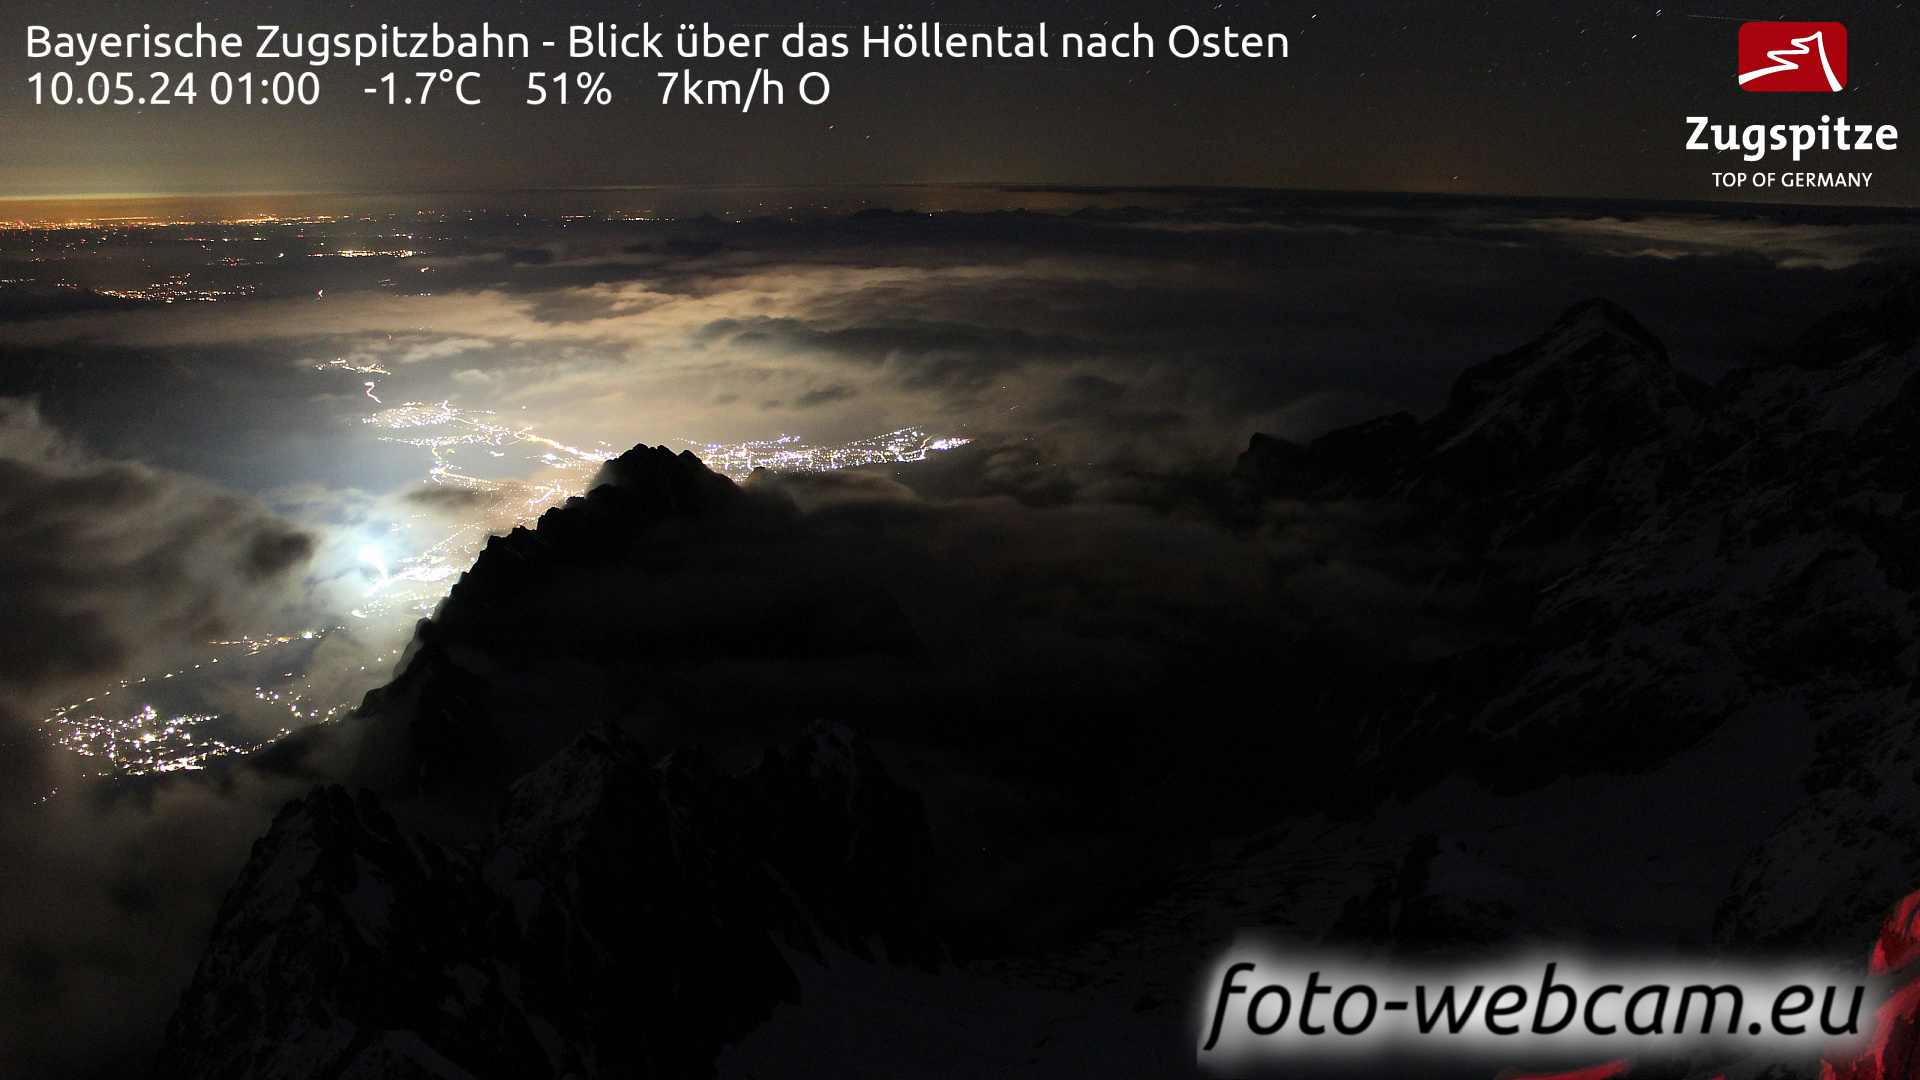 Zugspitze Fr. 01:05